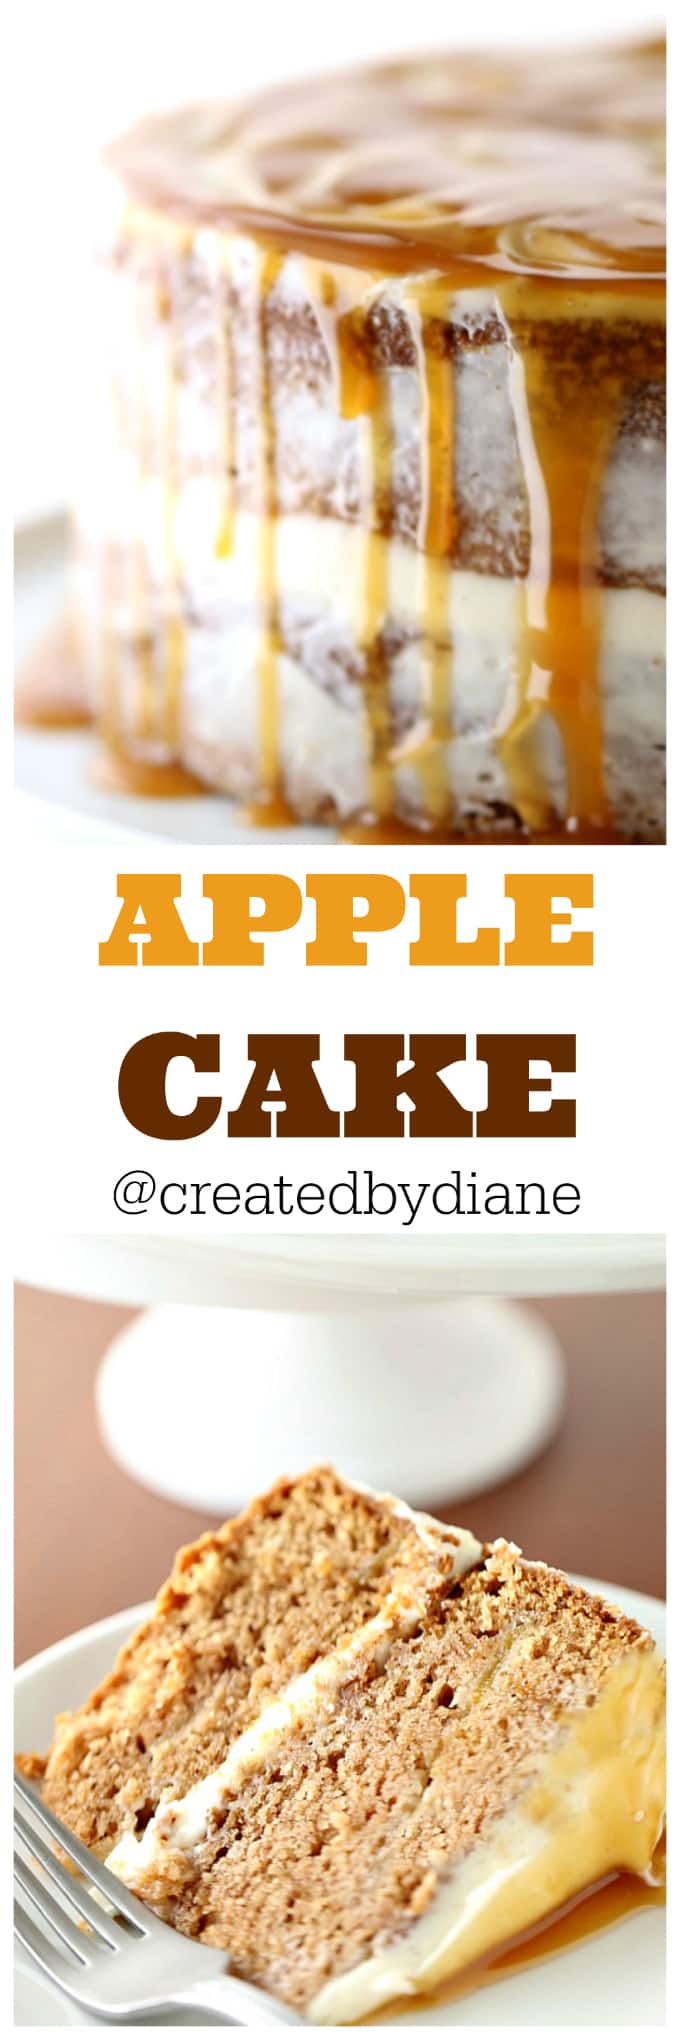 apple-cake-createdbydiane